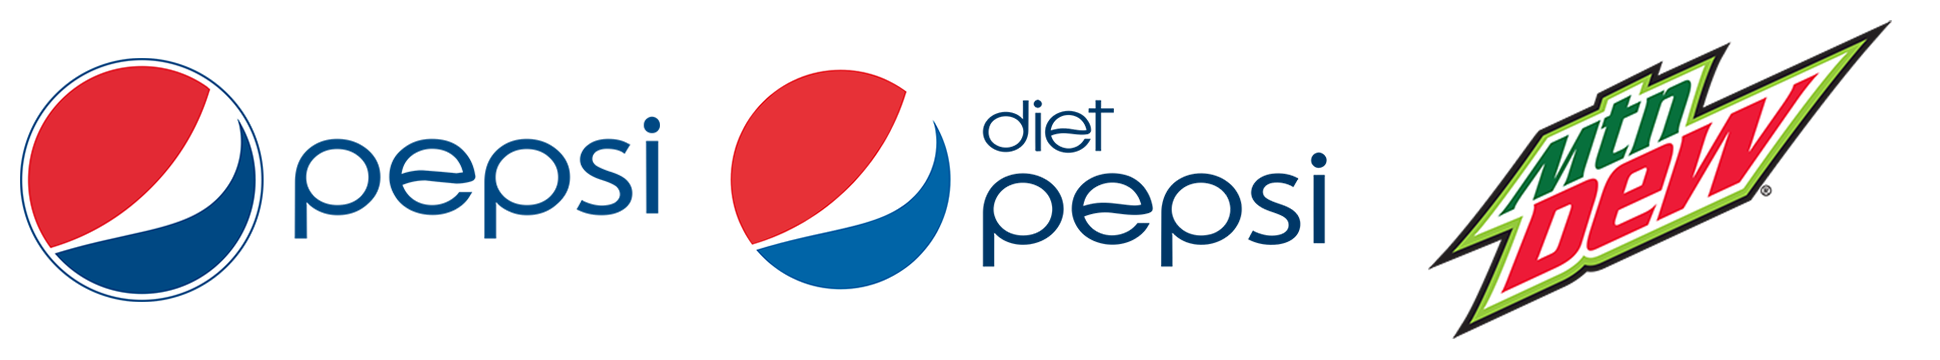 Drinks Logos — Pepsi | Diet Pepsi | Mountain Dew